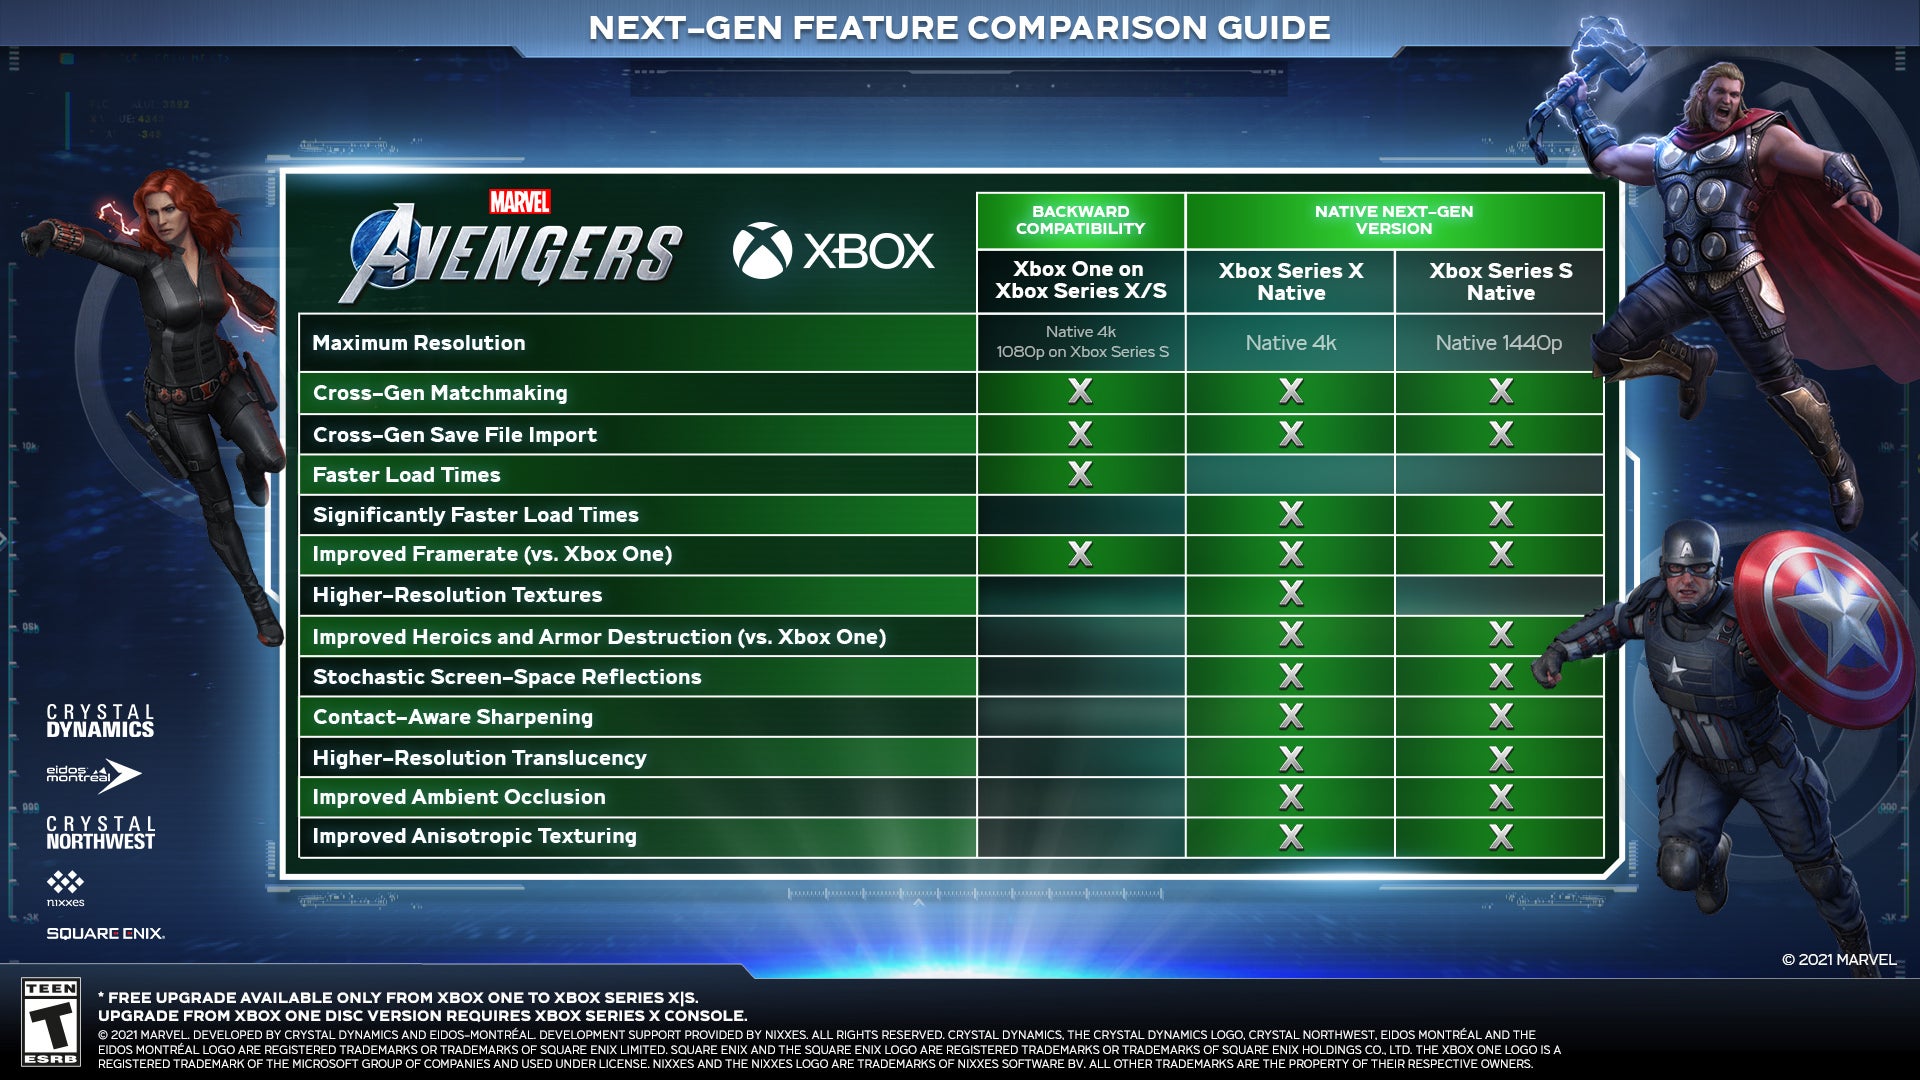 Marvel's Avengers on the Xbox Series X|S